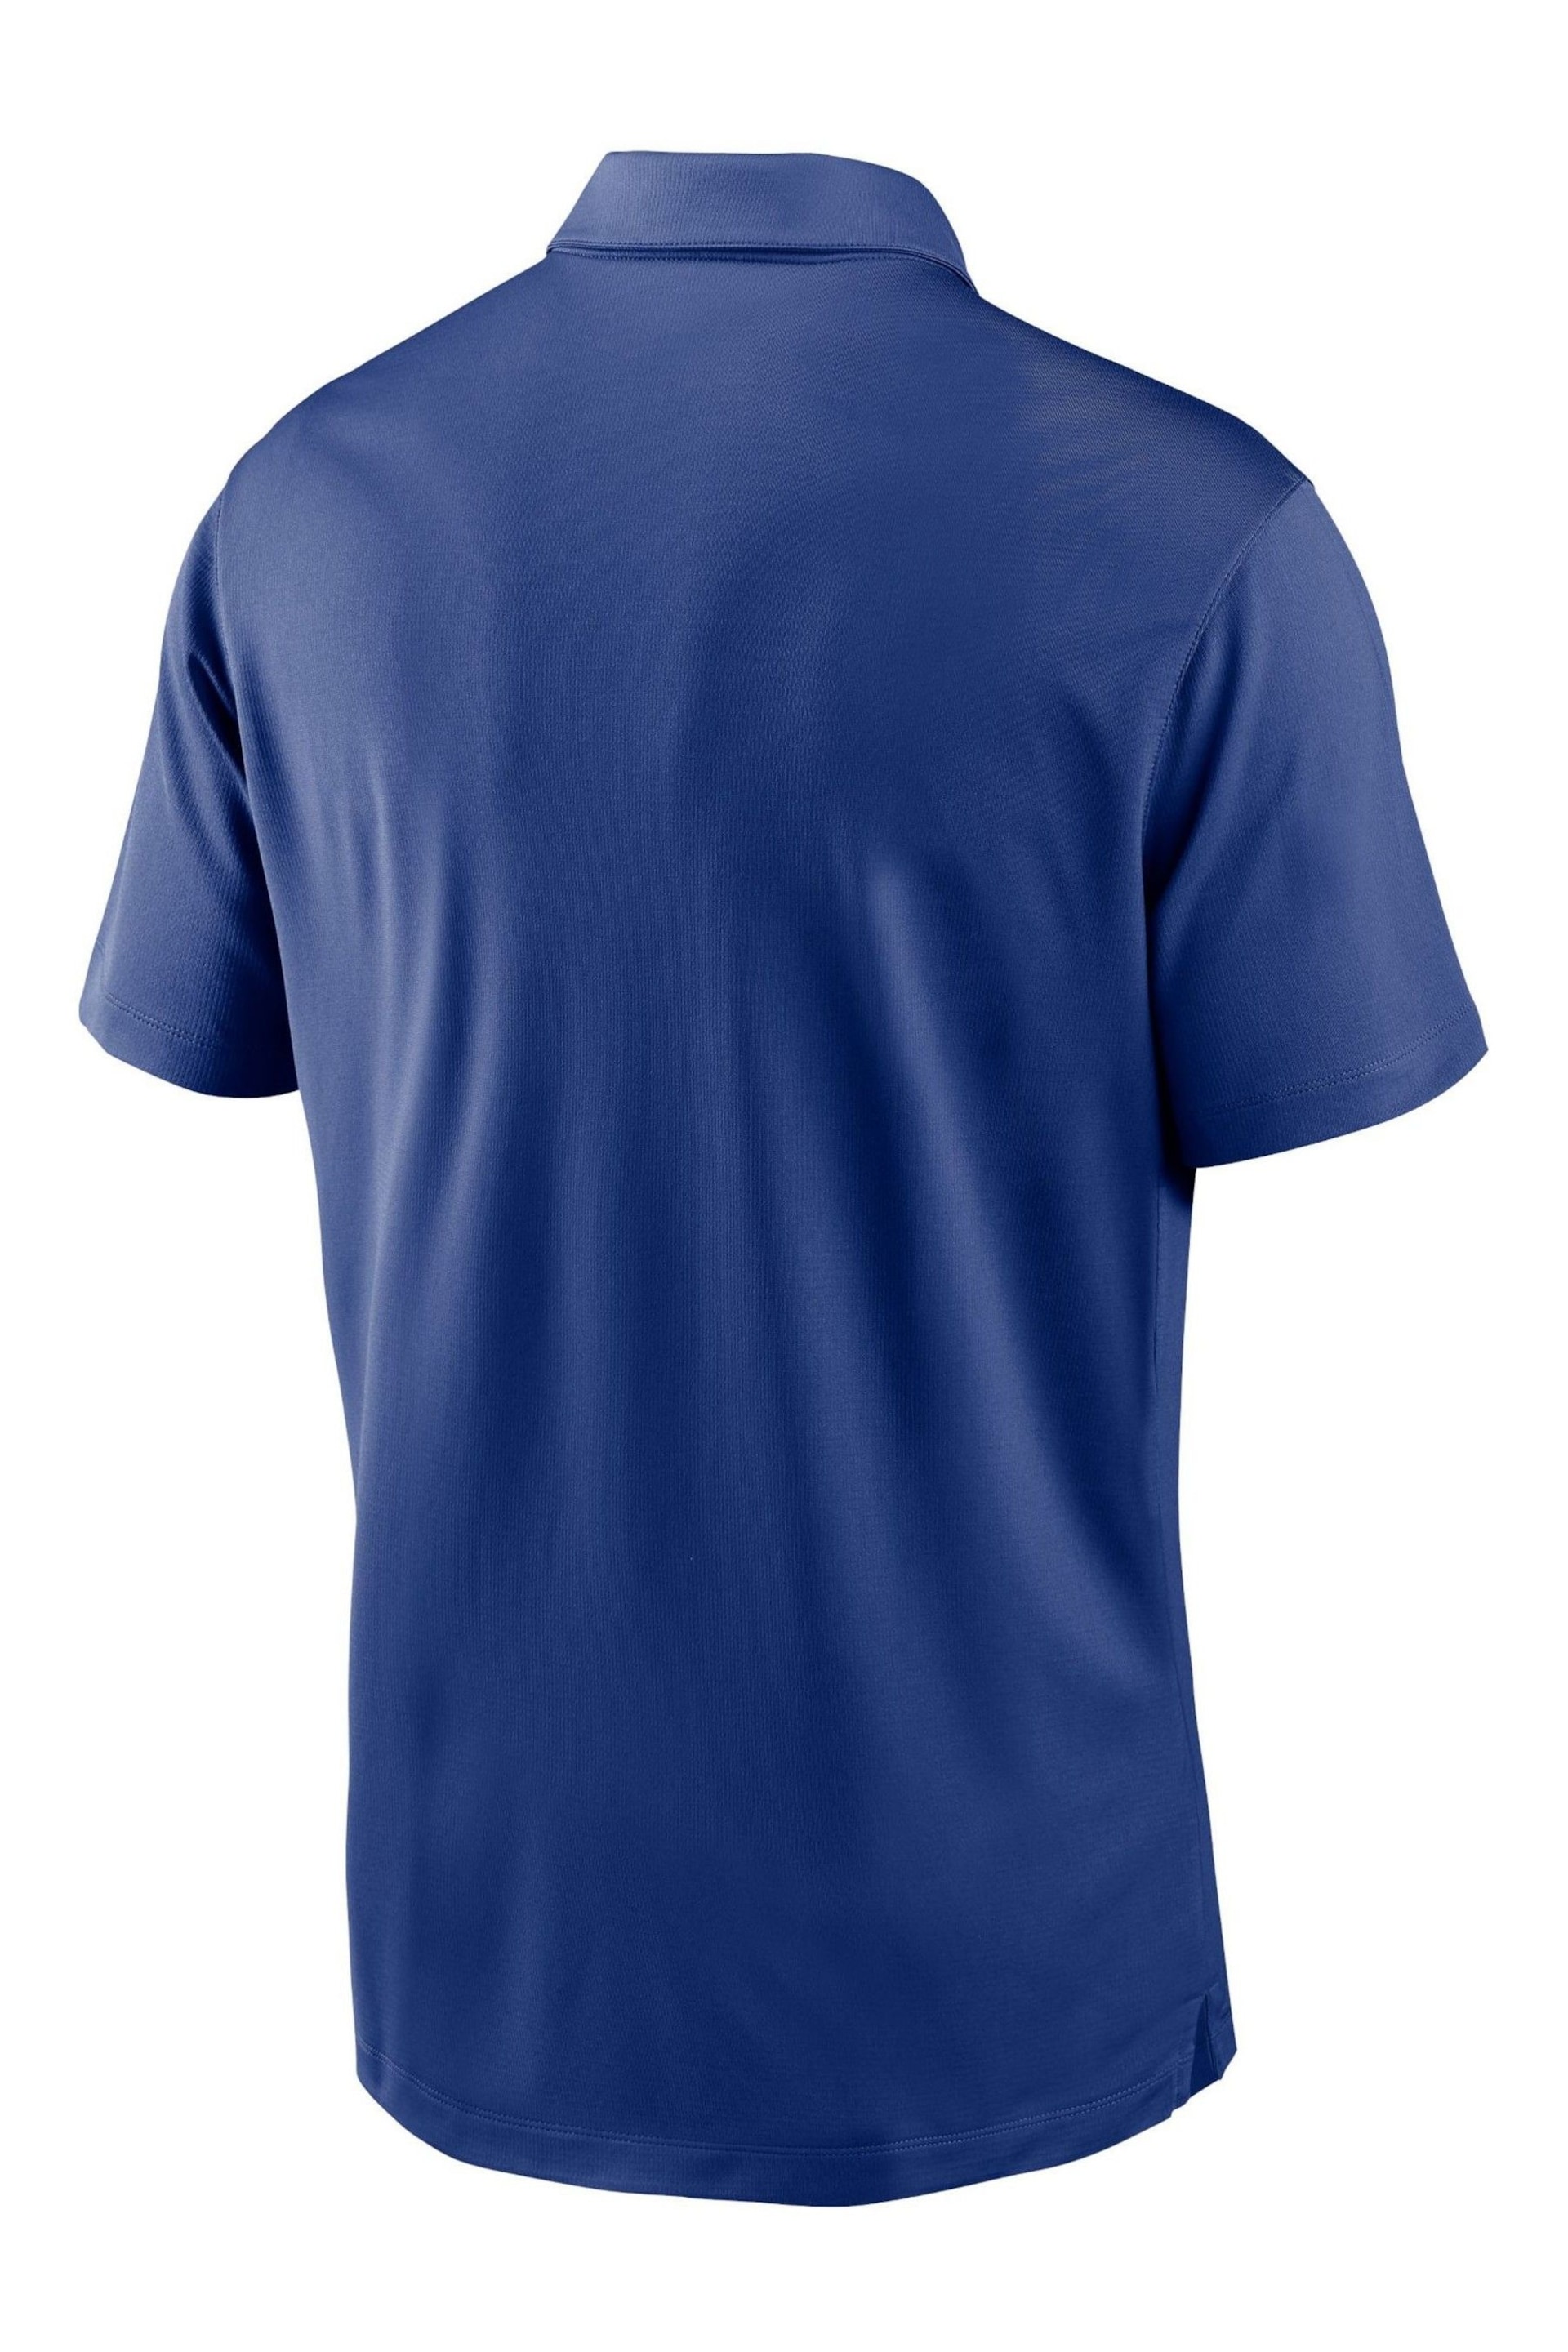 Fanatics Blue Los Angeles Dodgers Franchise Logo Polo Shirt - Image 2 of 3